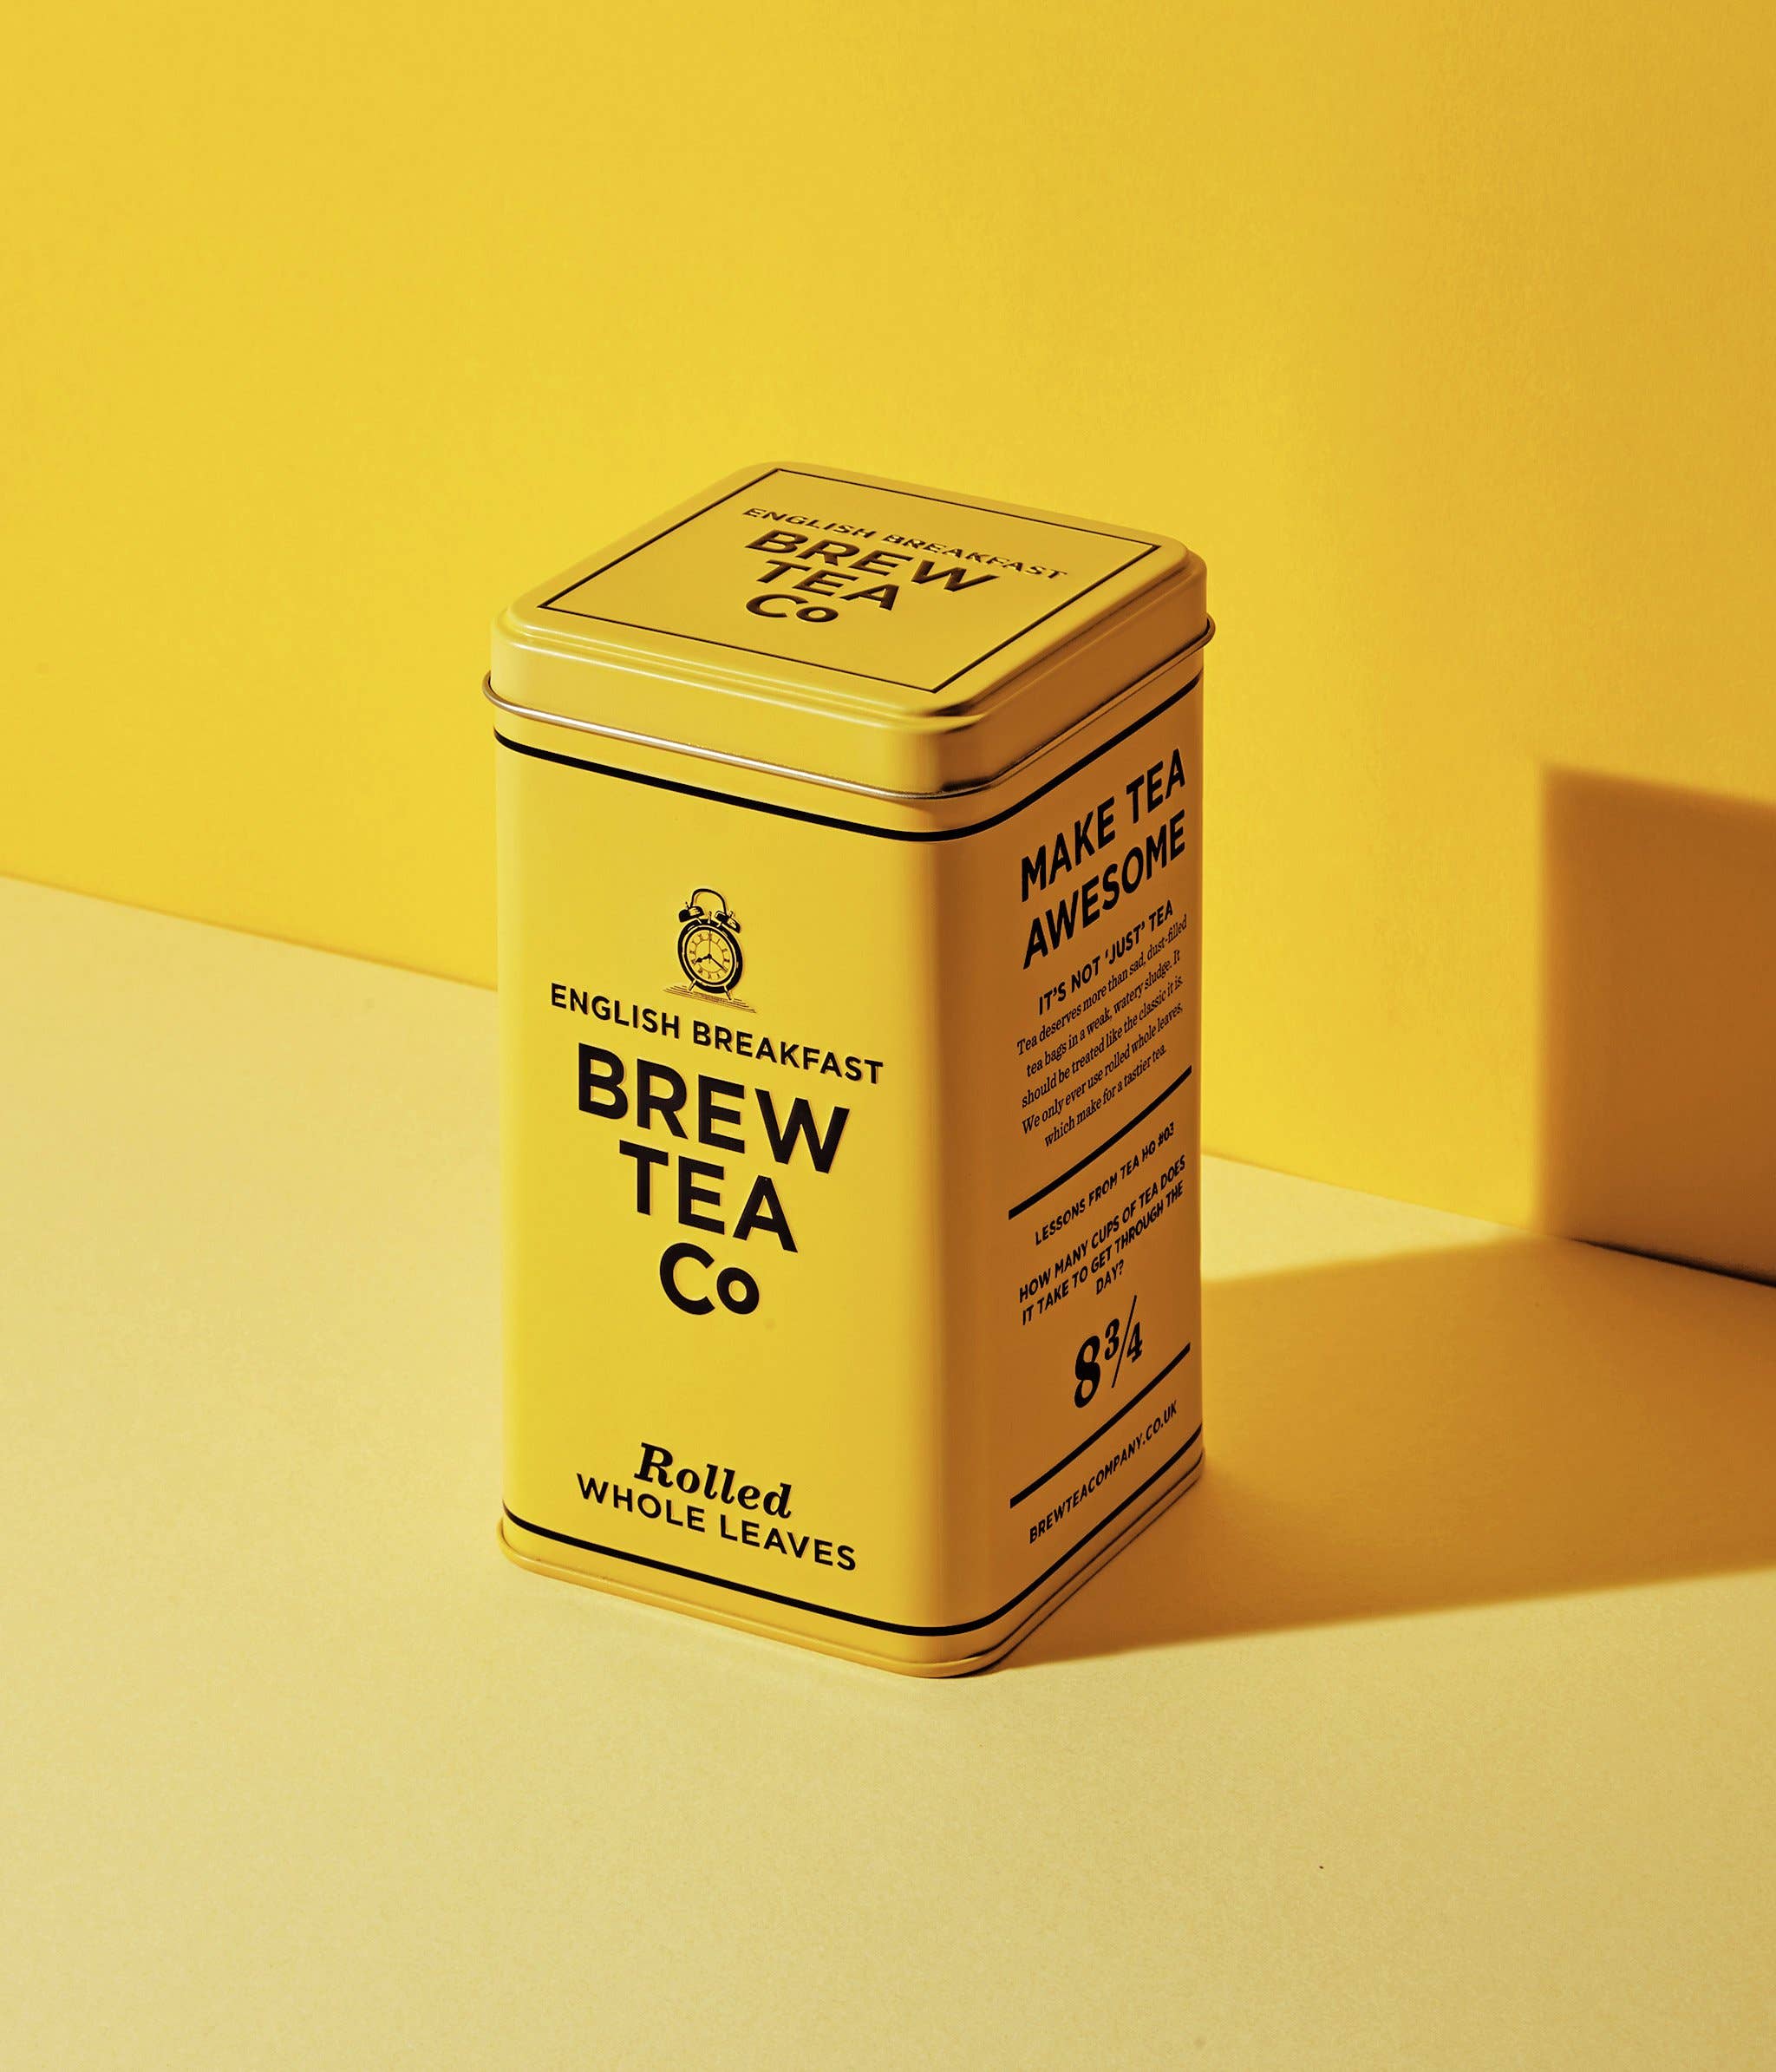 Brew La La Organic Green Tea - Natural Ginger Lemon Flavor - 50 Tea Bag Tin  - Low Caffeine Tea - USDA Certified Organic